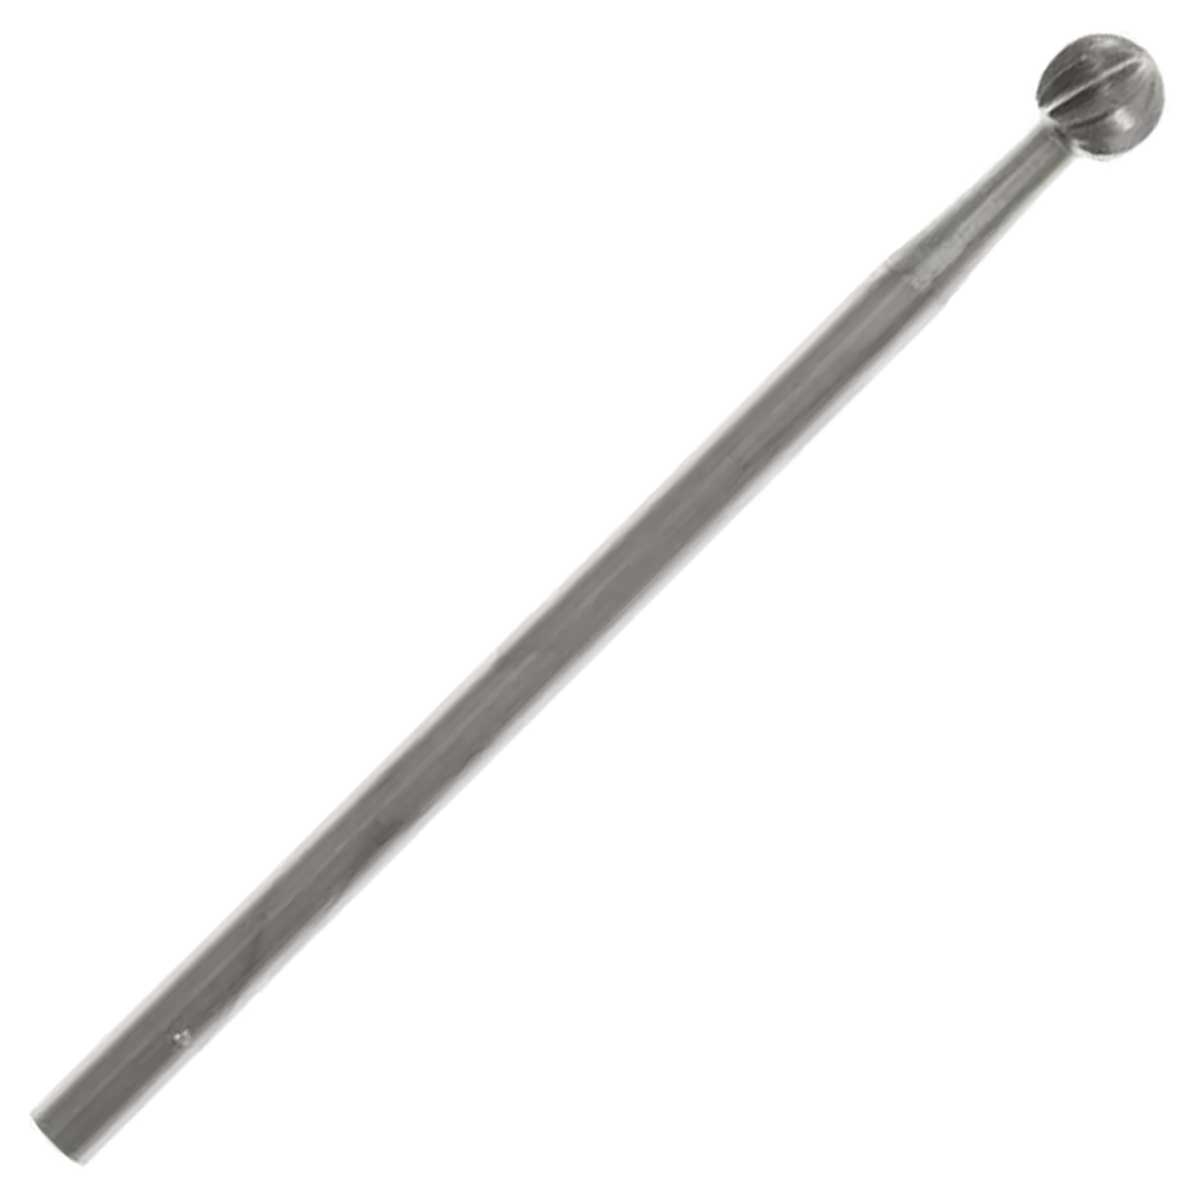 03.7mm Steel Round Bur - 3/32 inch shank - Germany